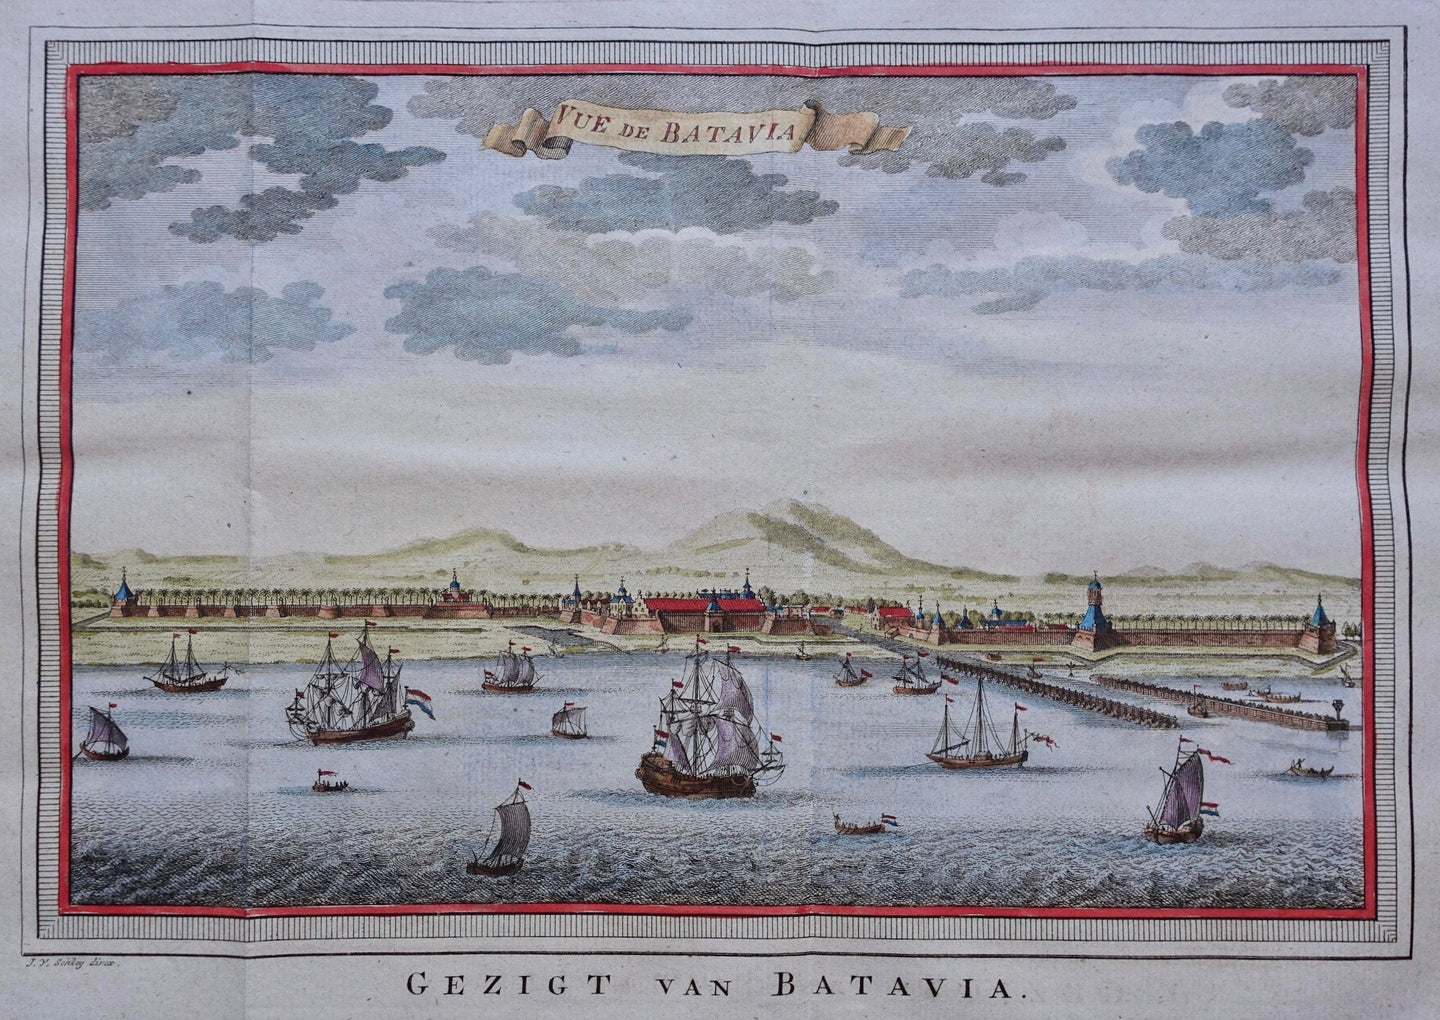 Indonesië Batavia Jakarta Indonesia - J van der Schley / P de Hondt - 1763